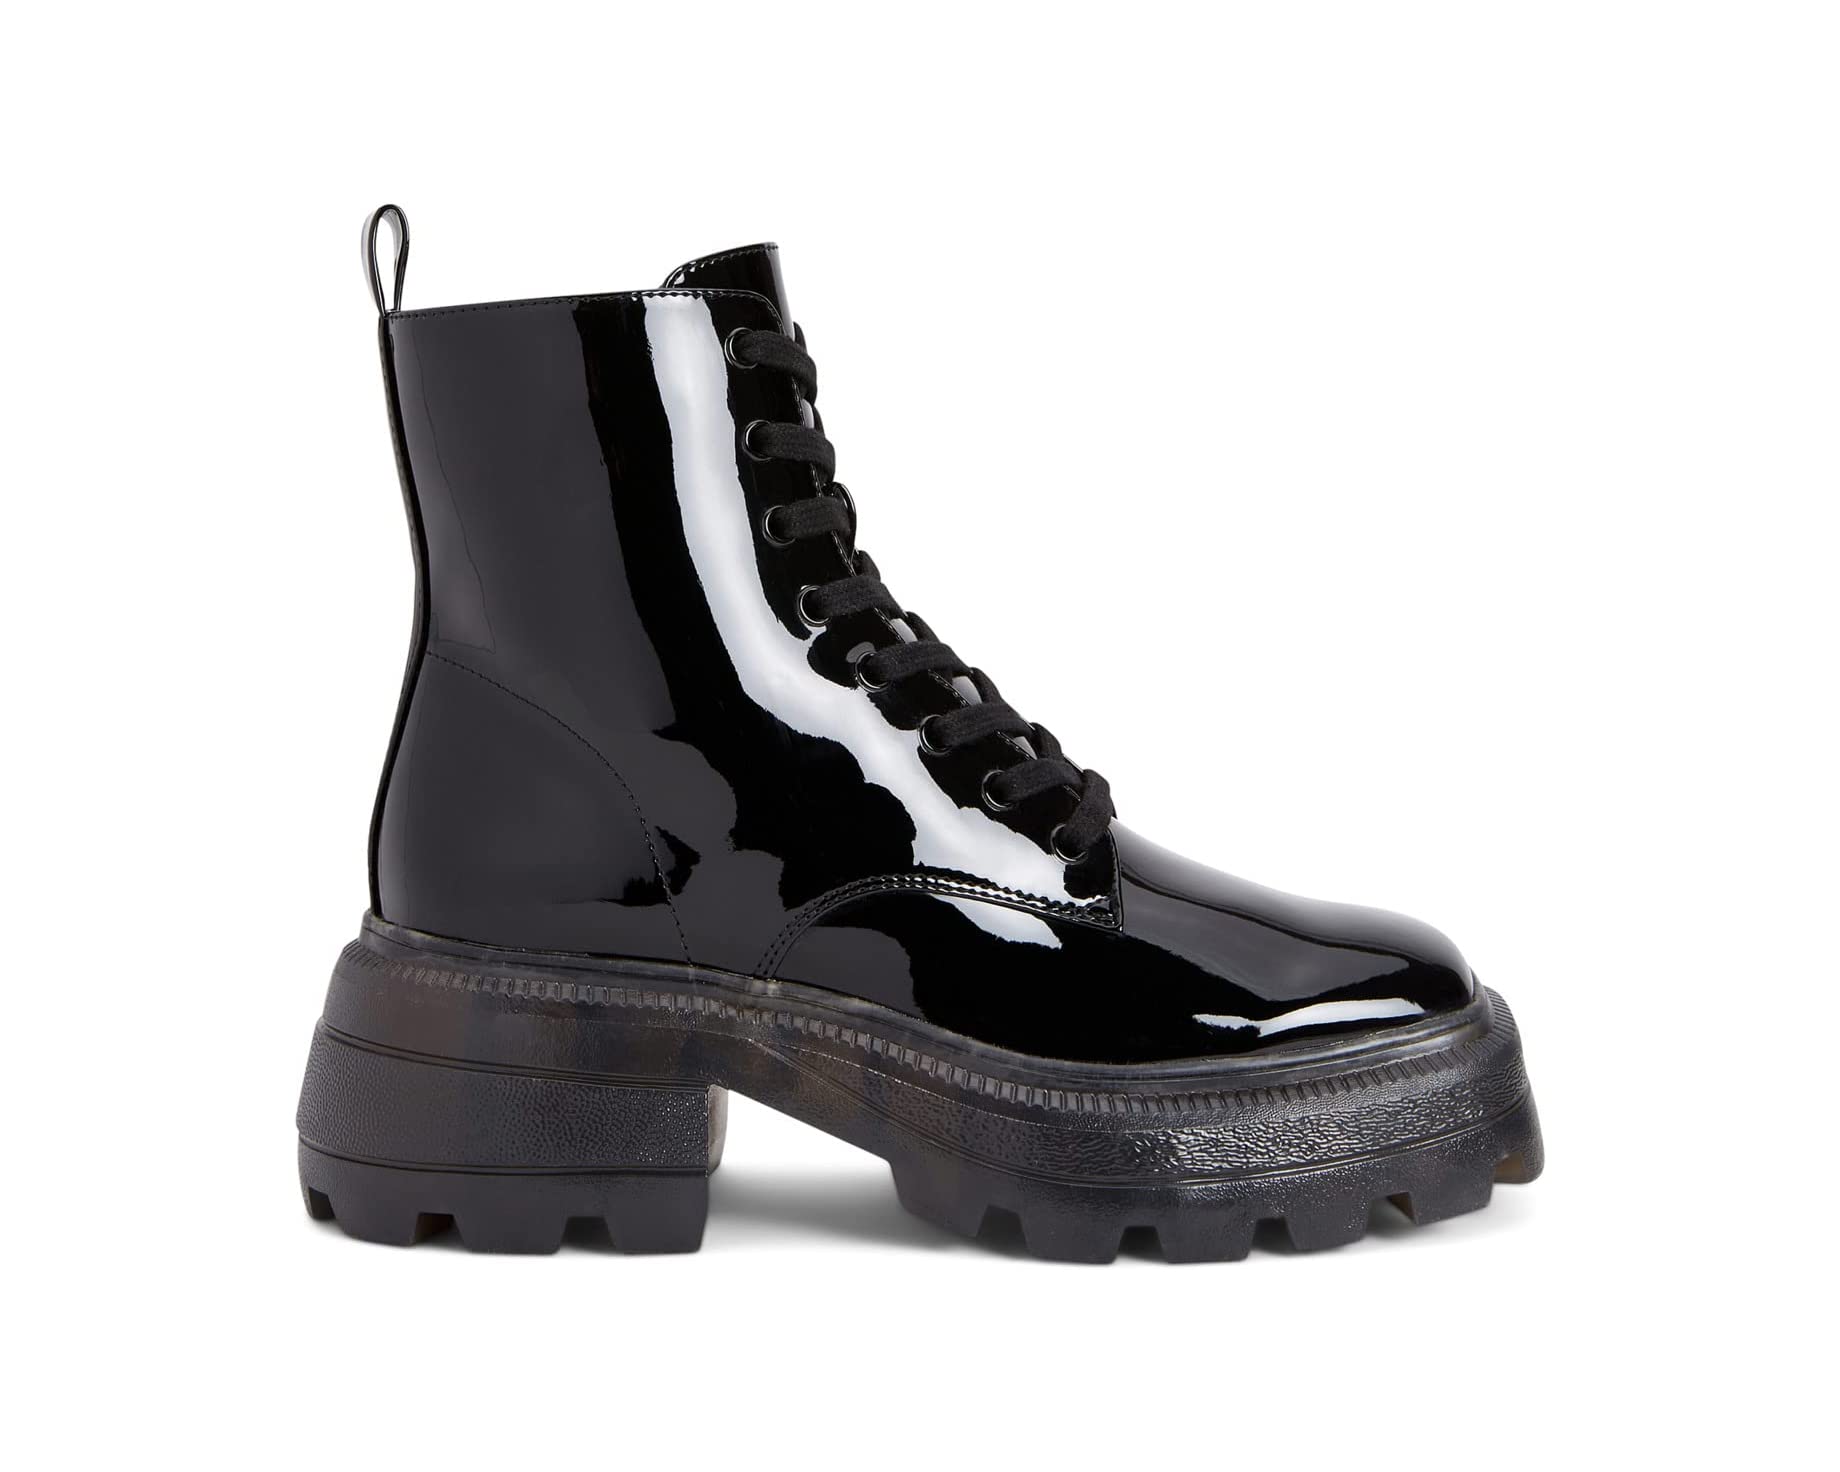 Ботинки The Geli Combat Boot Katy Perry, черный цена и фото